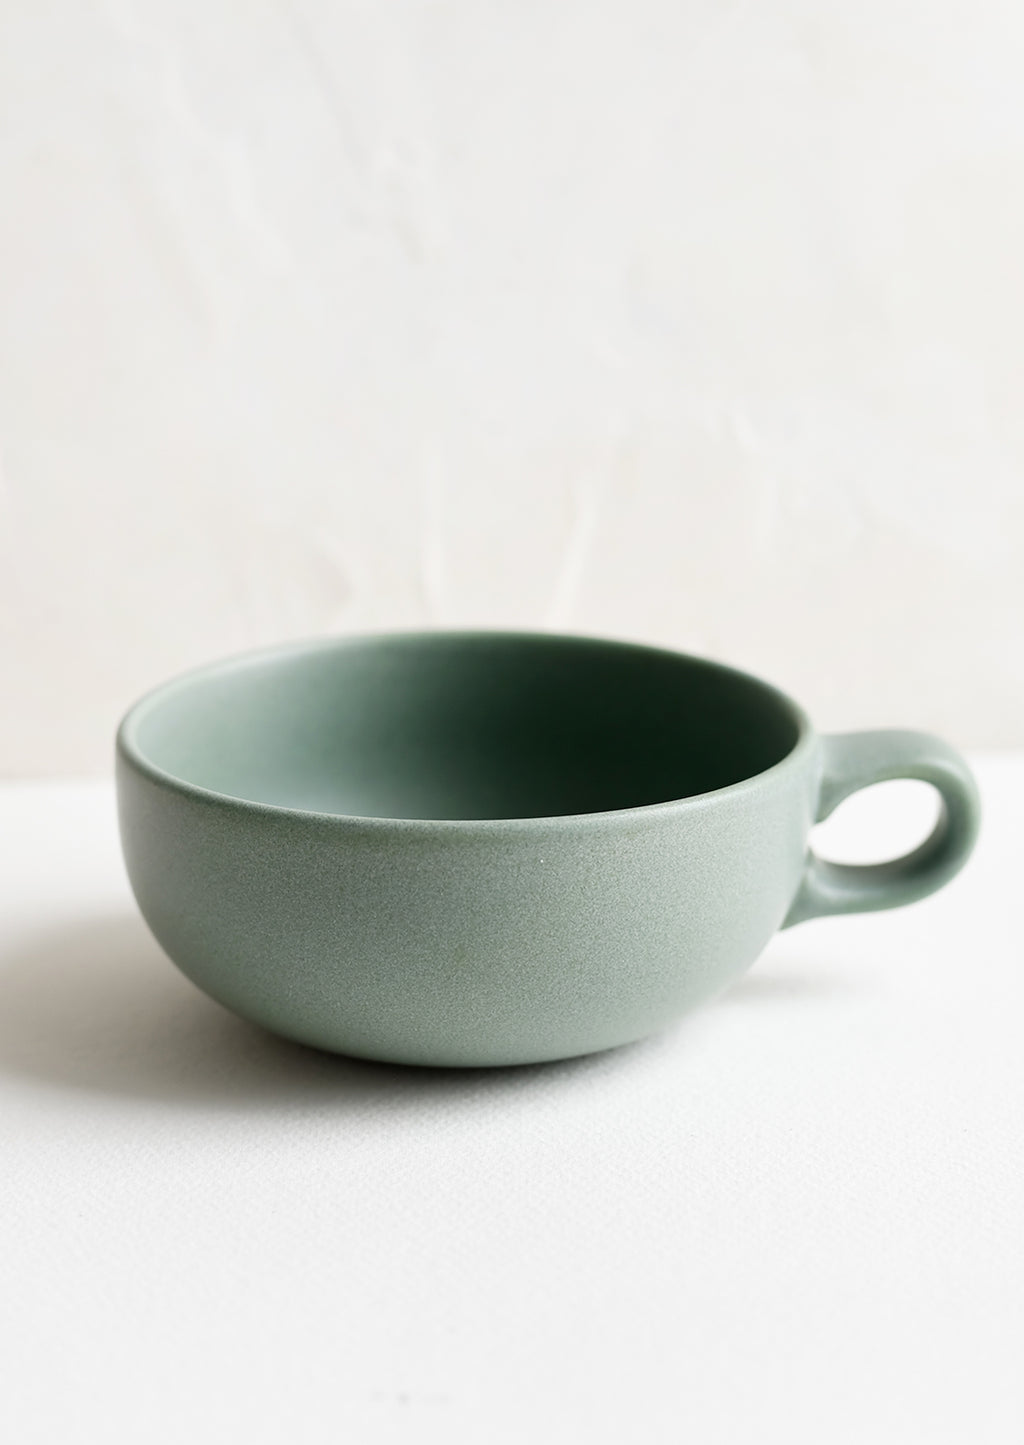 Juniper: A ceramic bowl mug in juniper green.